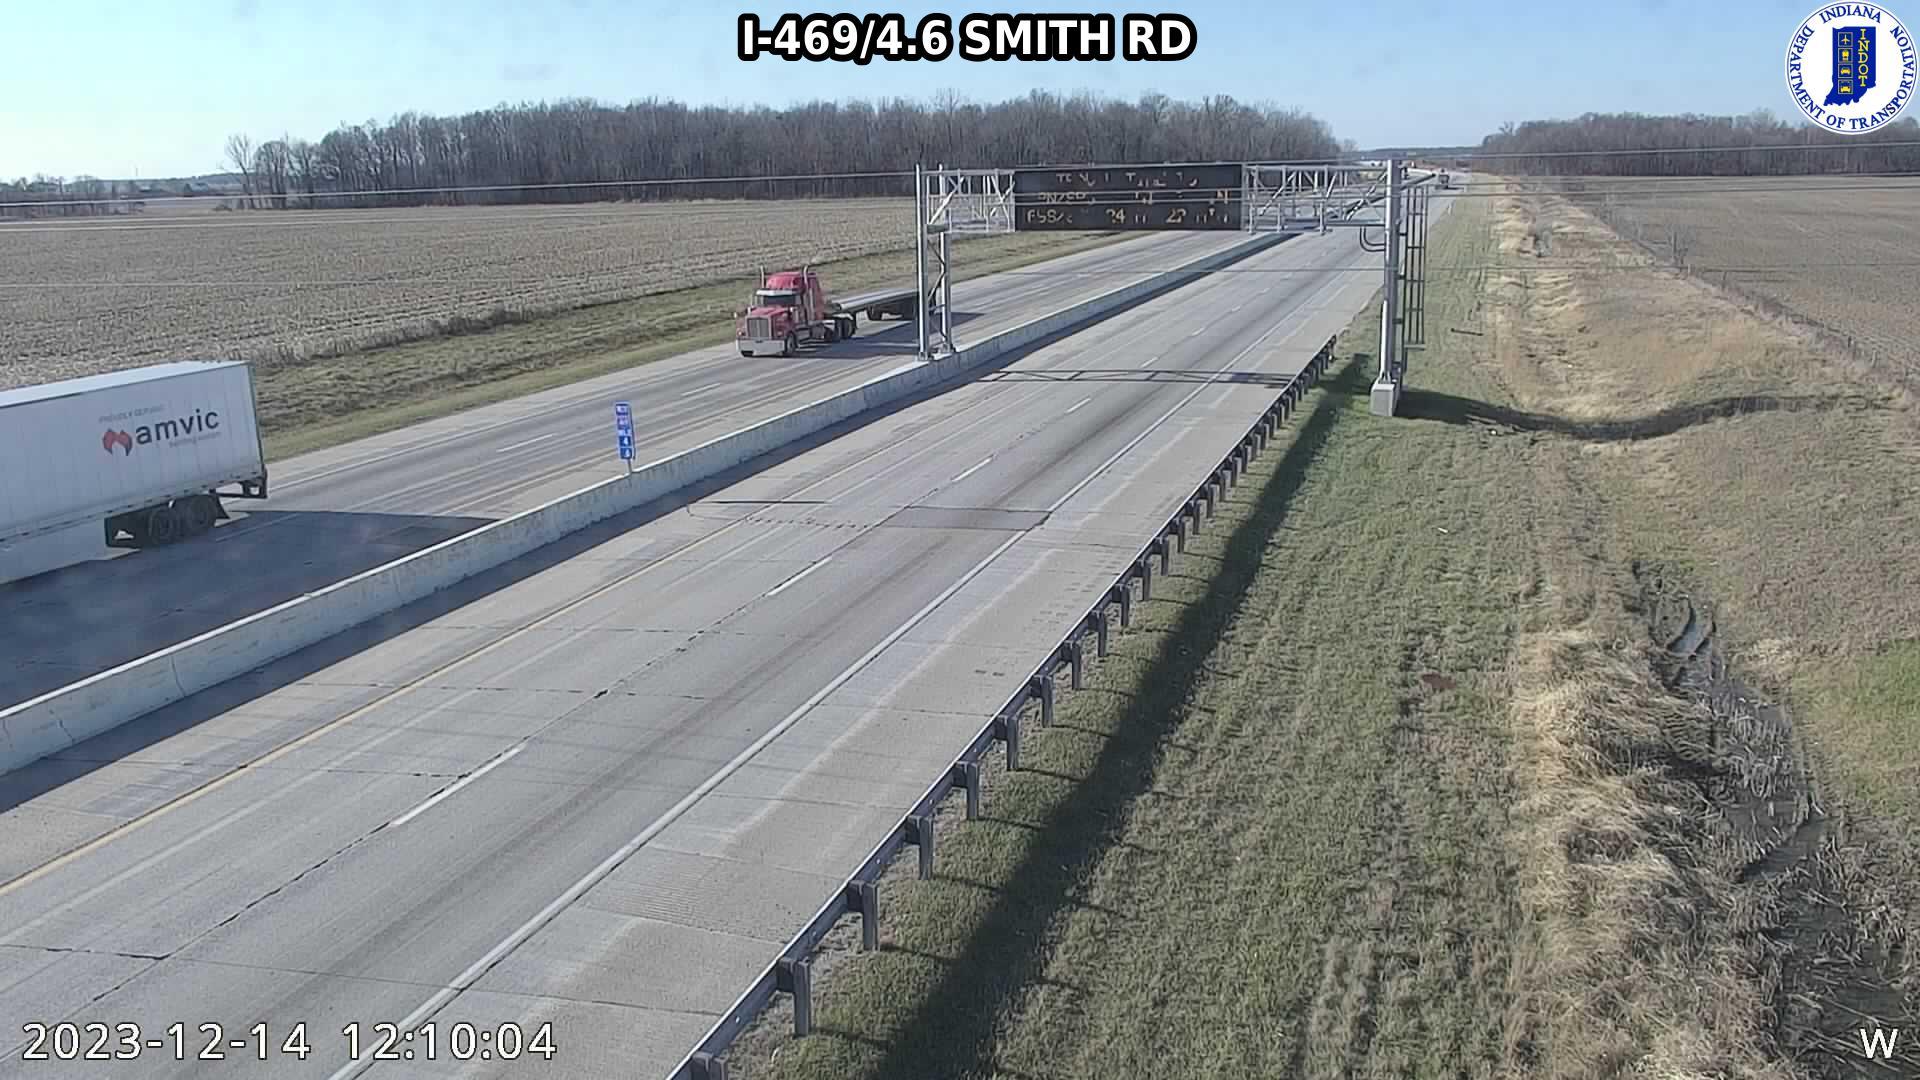 Traffic Cam Nine Mile: I-469: I-469/4.6 SMITH RD Player